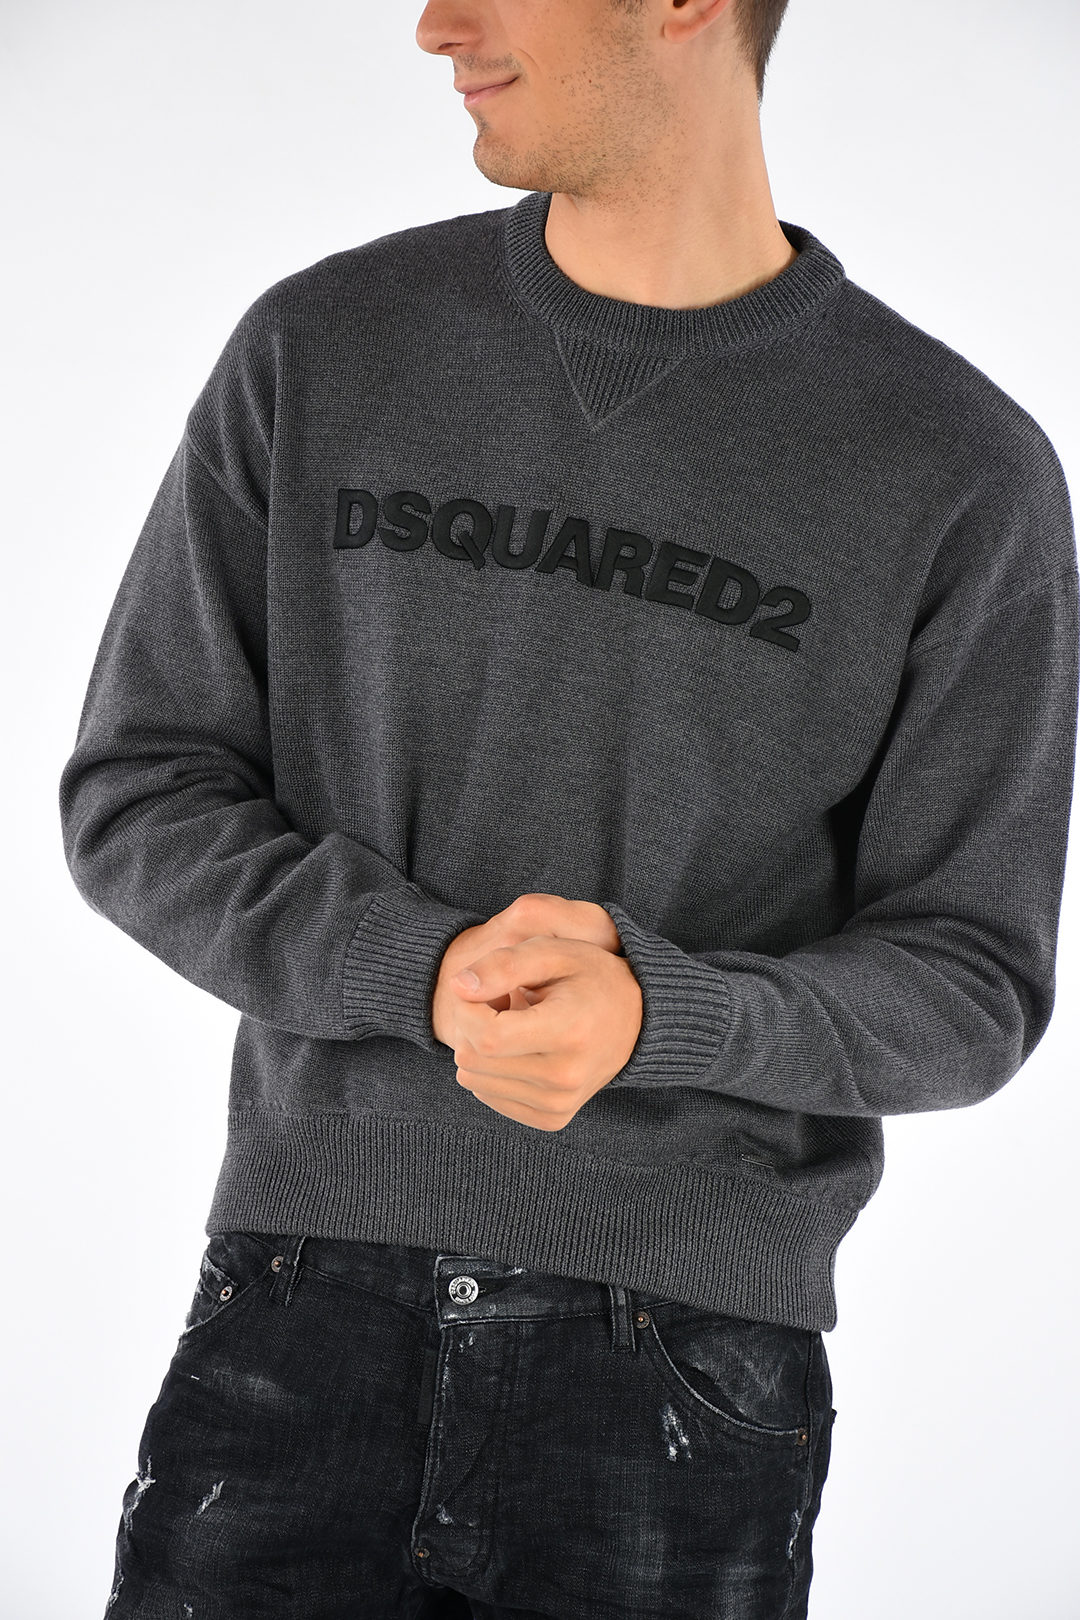 dsquared2 sweater sale